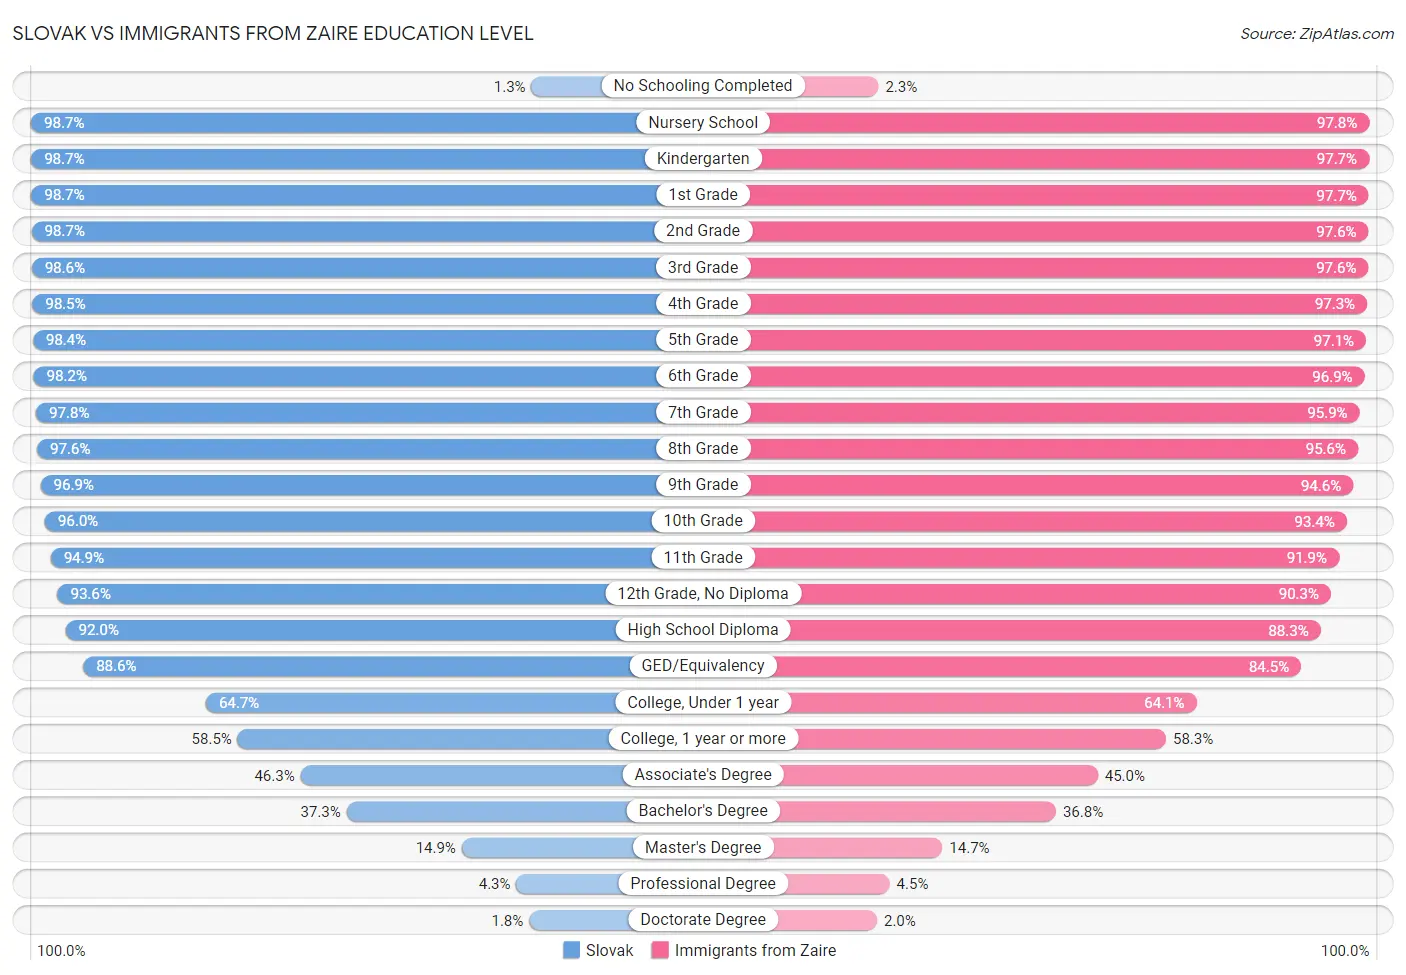 Slovak vs Immigrants from Zaire Education Level